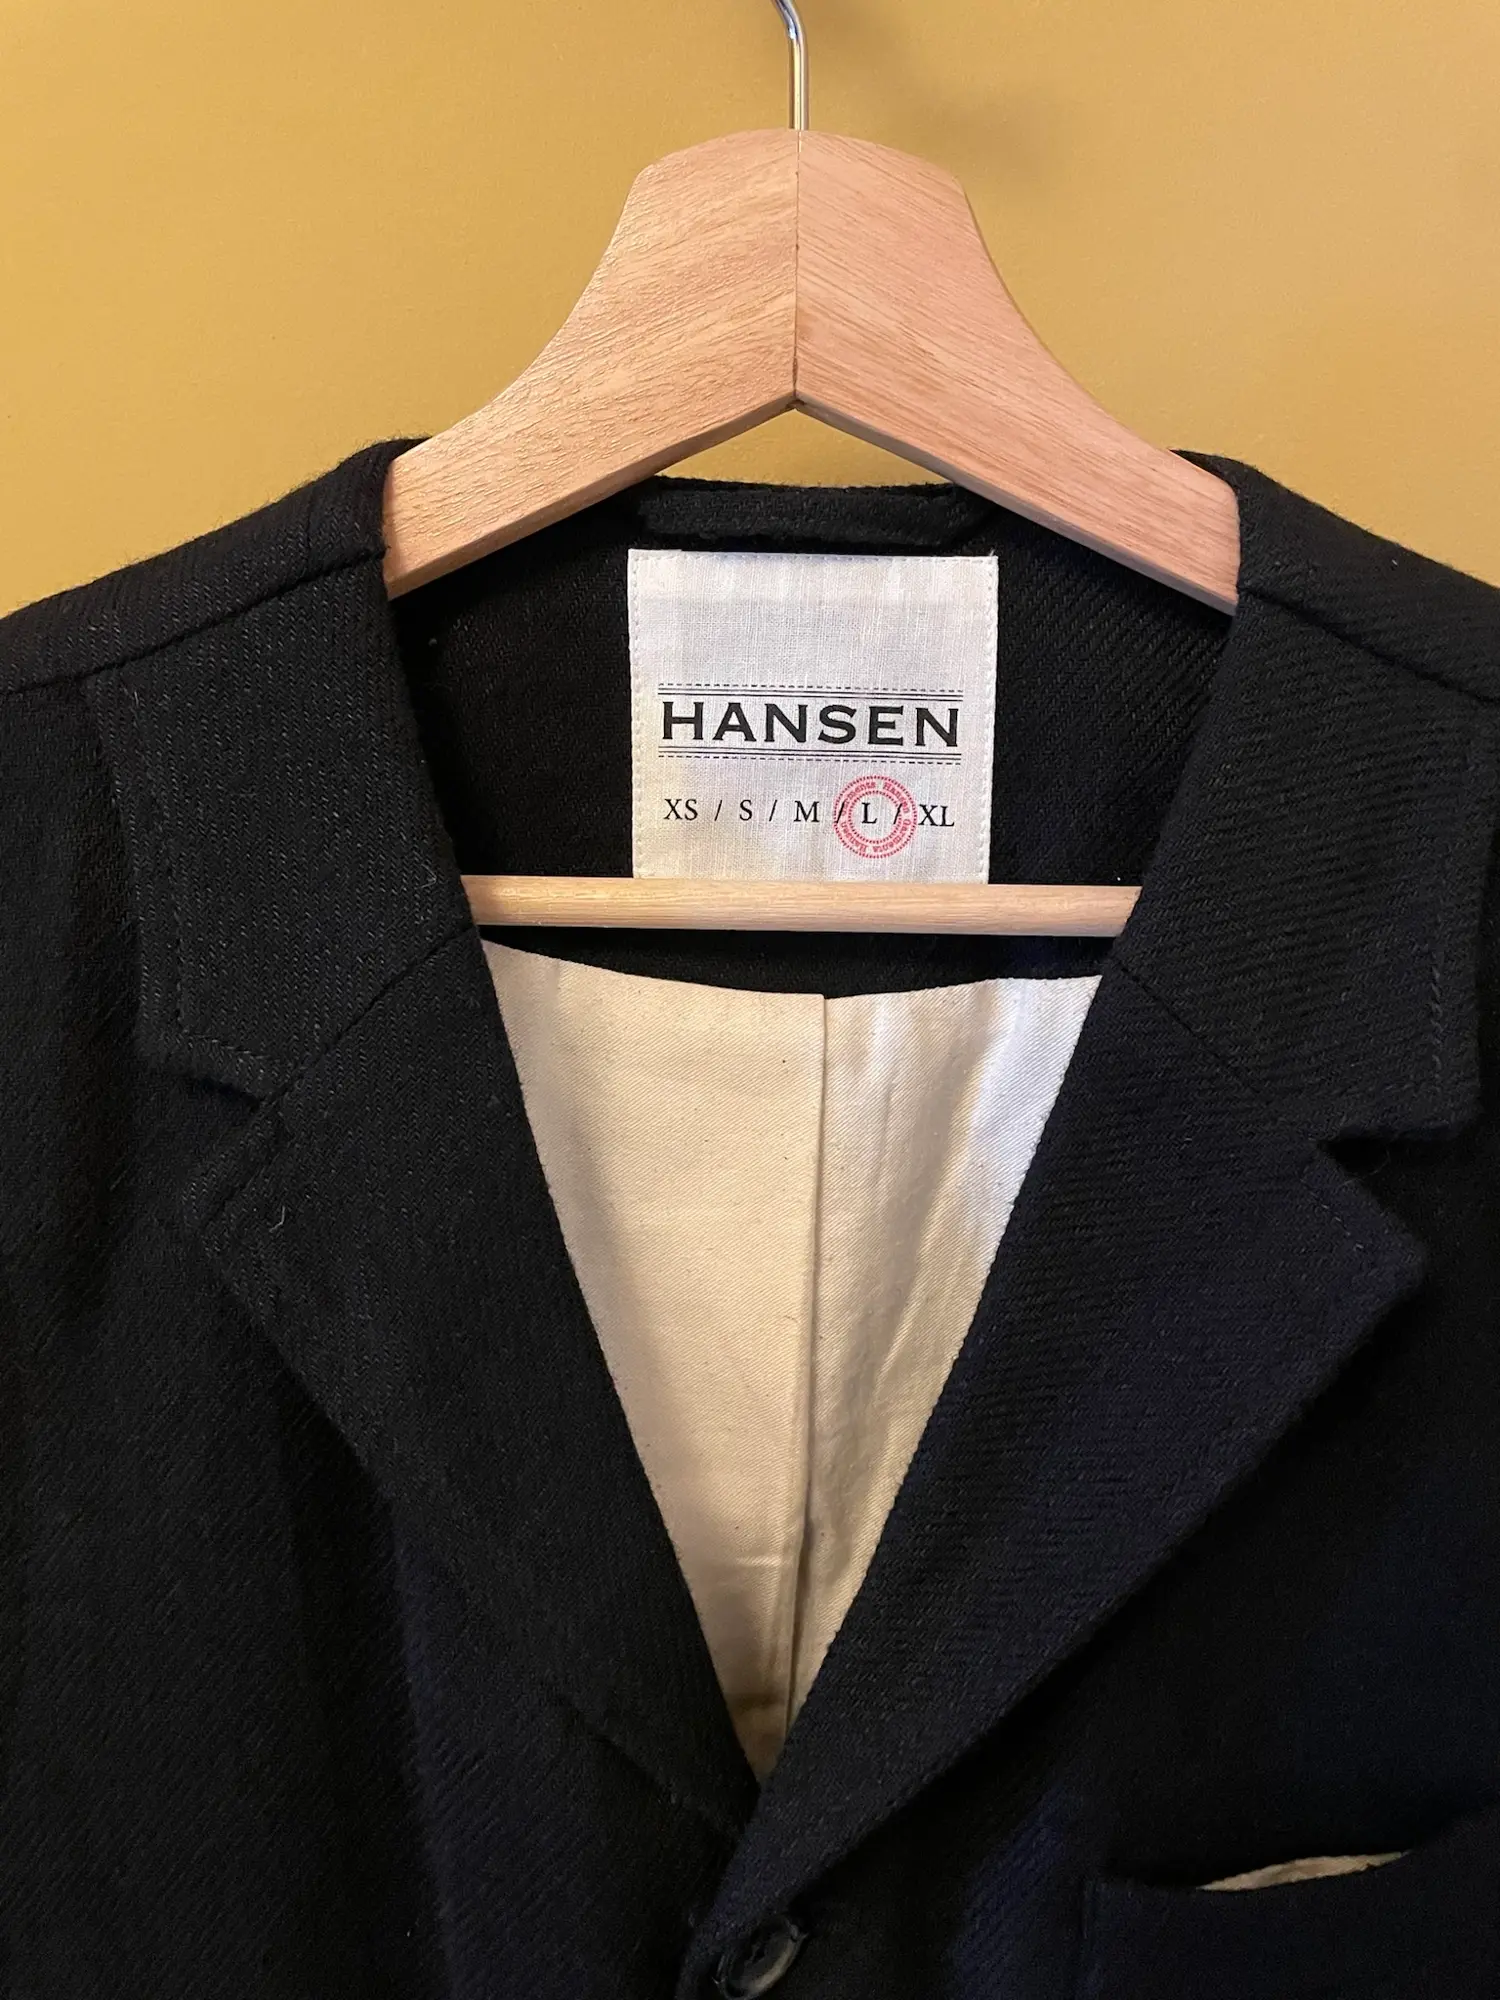 Hansen Garments andet jakkesæt